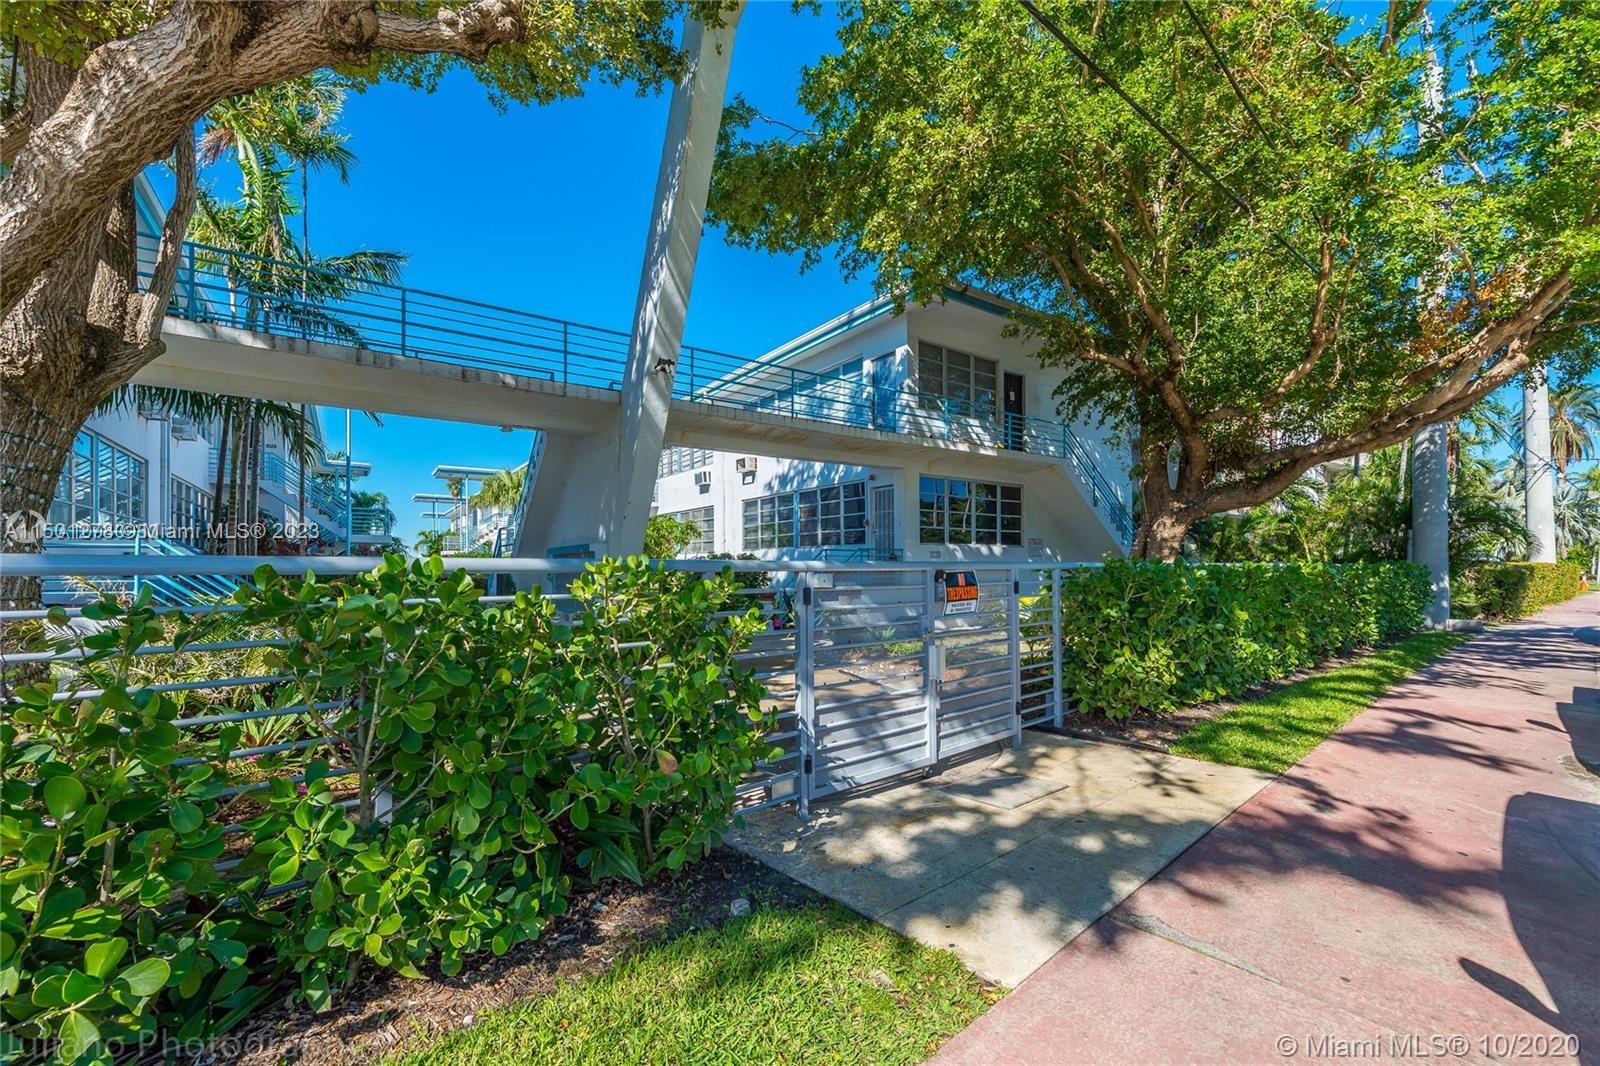 Rental Property at 4710 Pine Tree Dr 21, Miami Beach, Miami-Dade County, Florida - Bedrooms: 1 
Bathrooms: 1  - $2,000 MO.